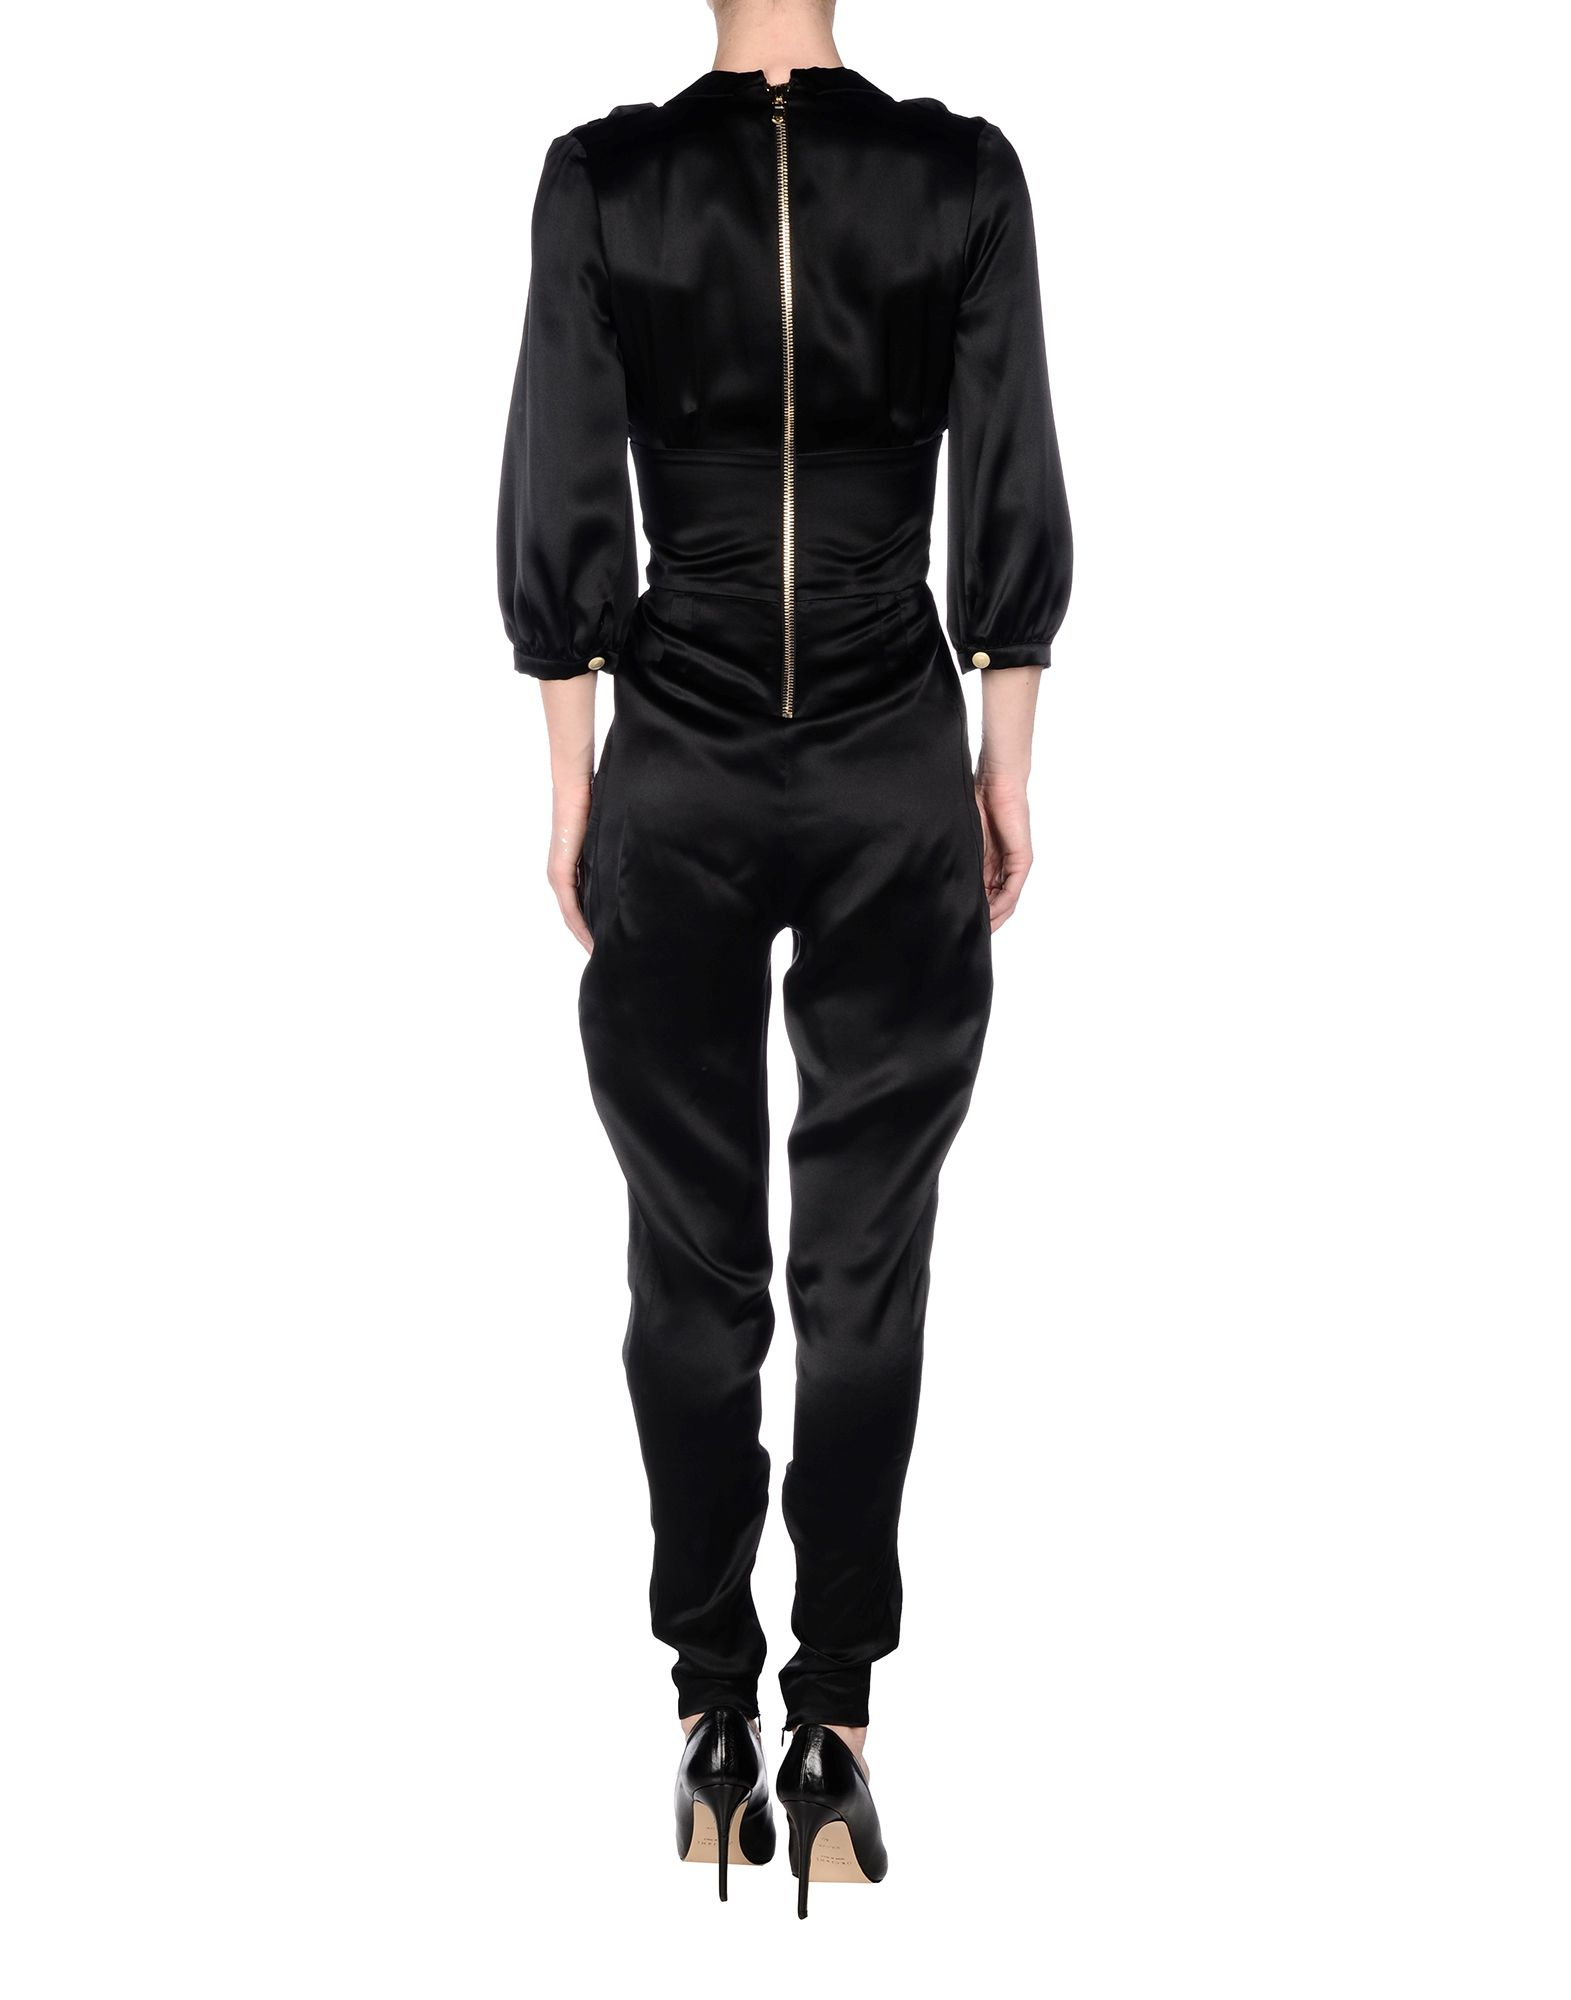 Balmain Leather Jumpsuit in Black - Lyst